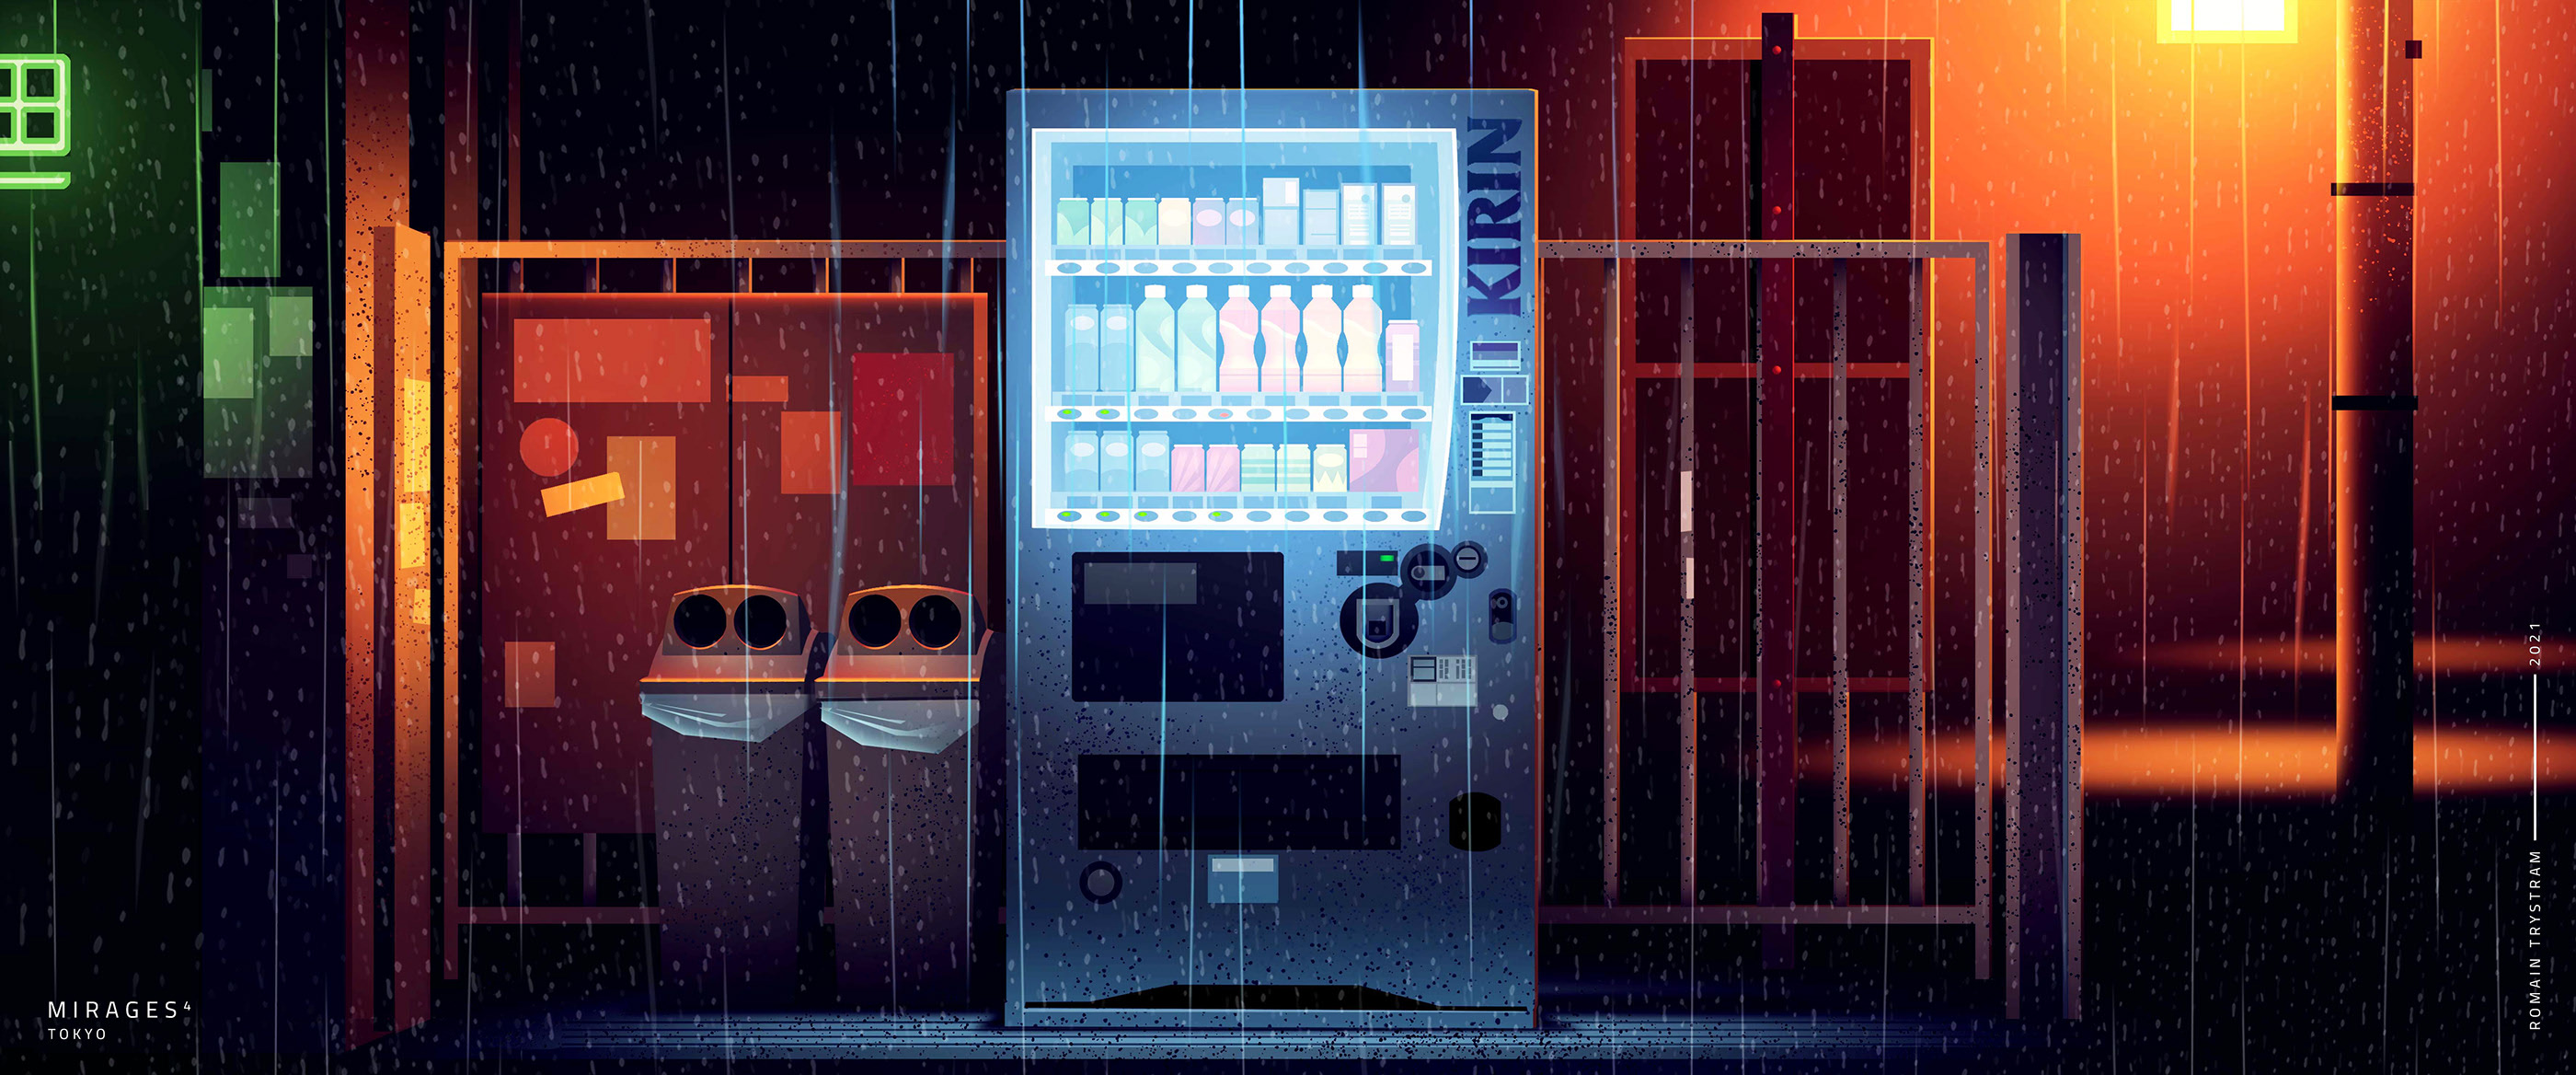 Romain Trystram Digital Art Neon Lights Rain Tokyo Vending Machine Trash Bin 2800x1168